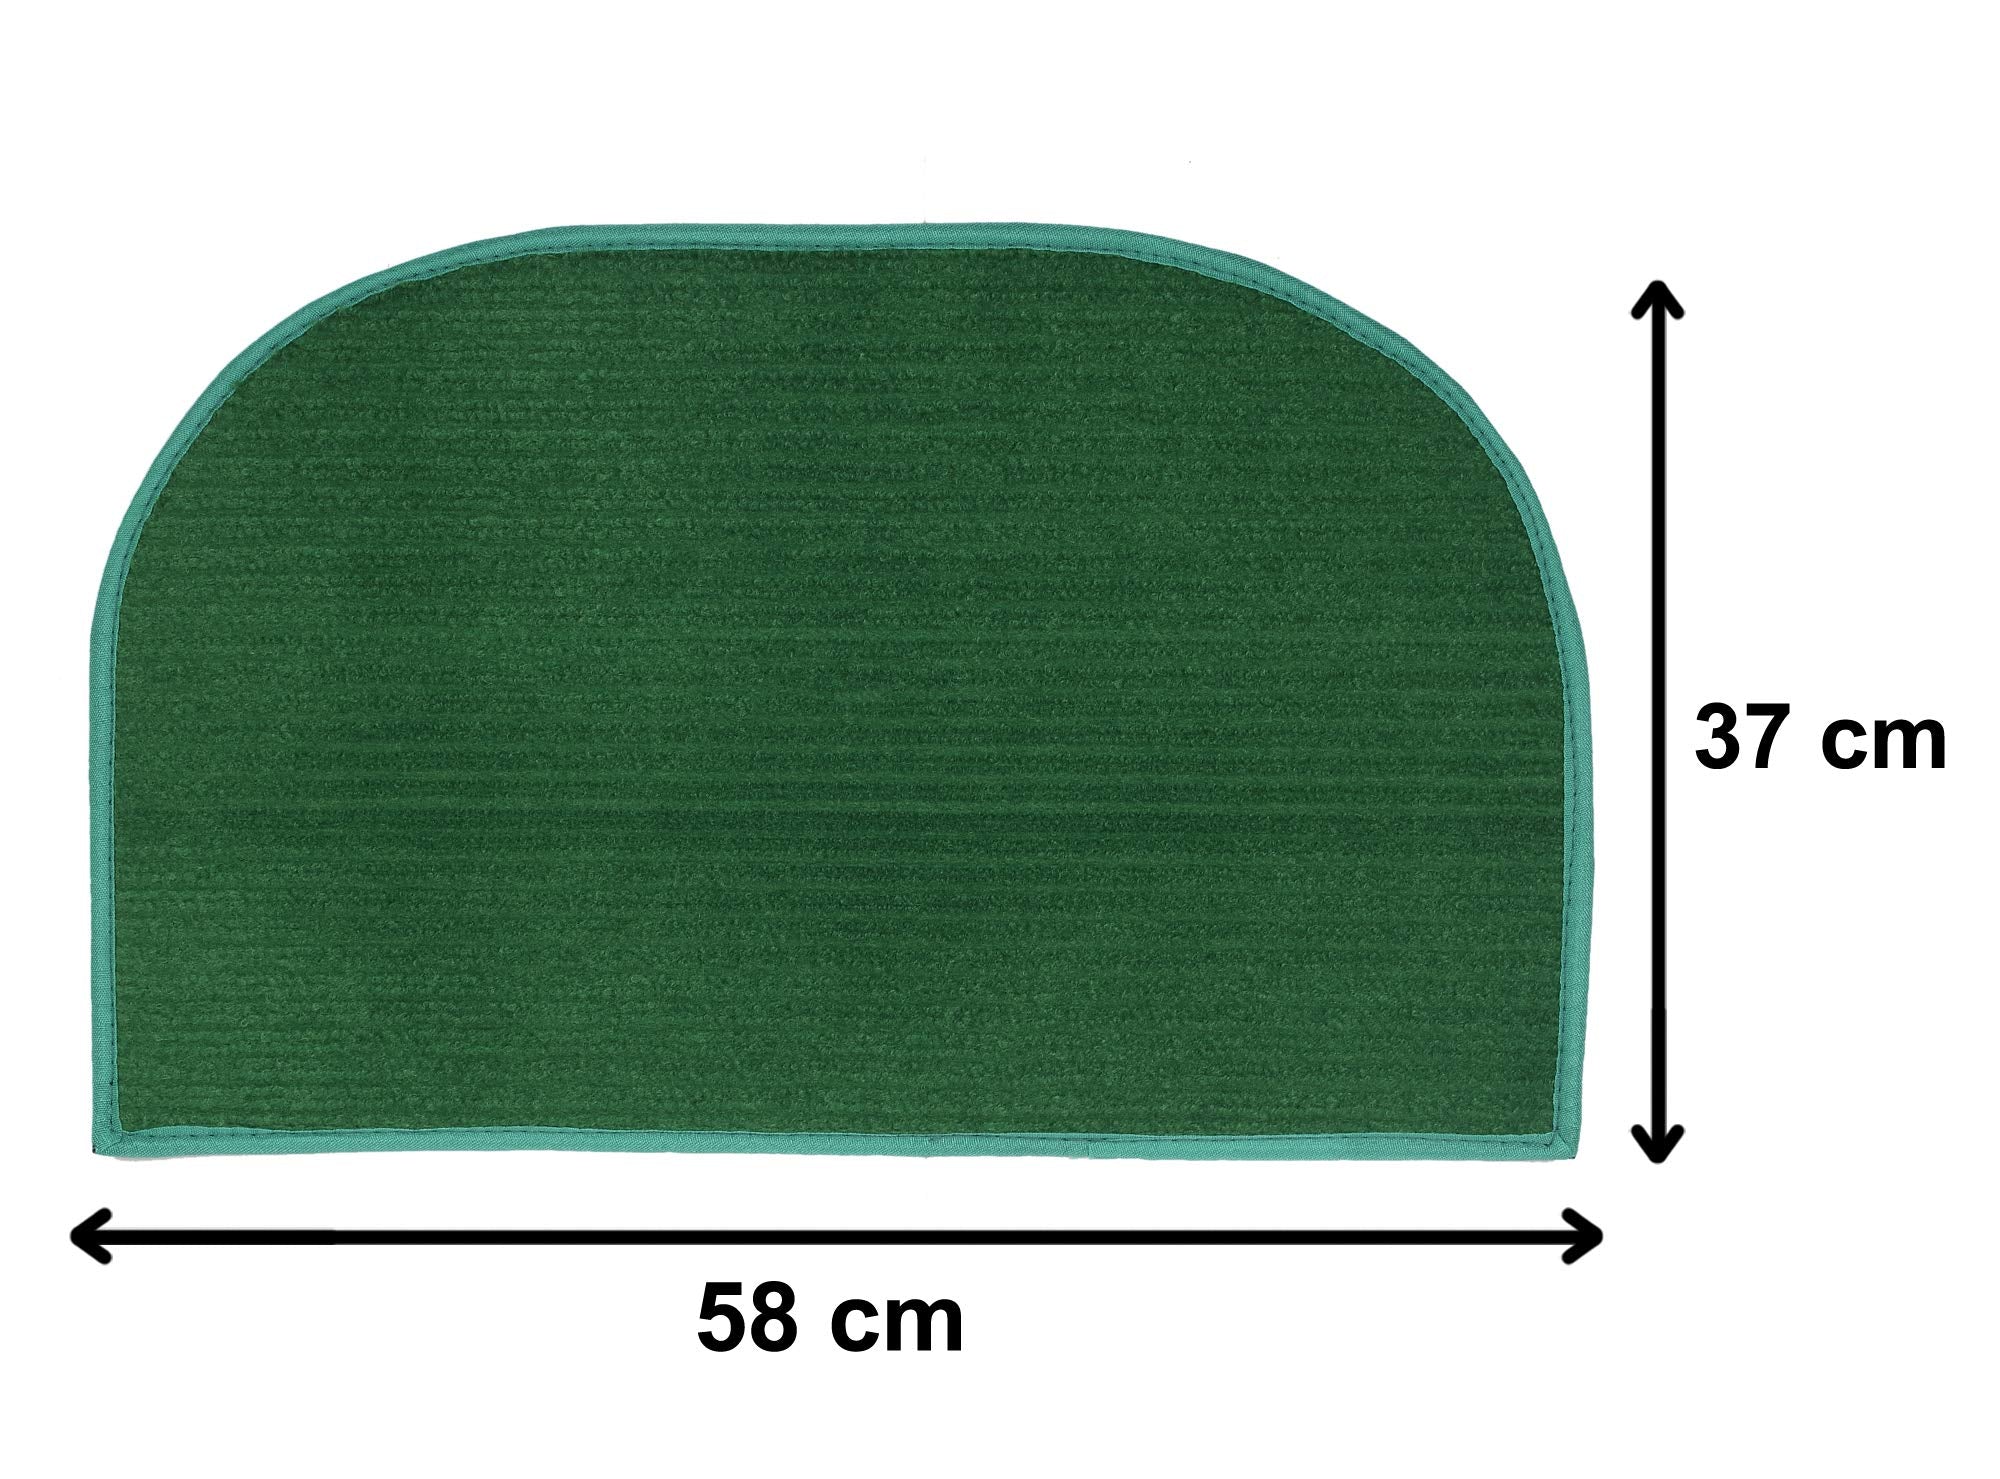 Heart Home D-Shape Durable Microfiber Door Mat, Heavy Duty Doormat,(14'' x 23'', Green)-HEART12159, Standard